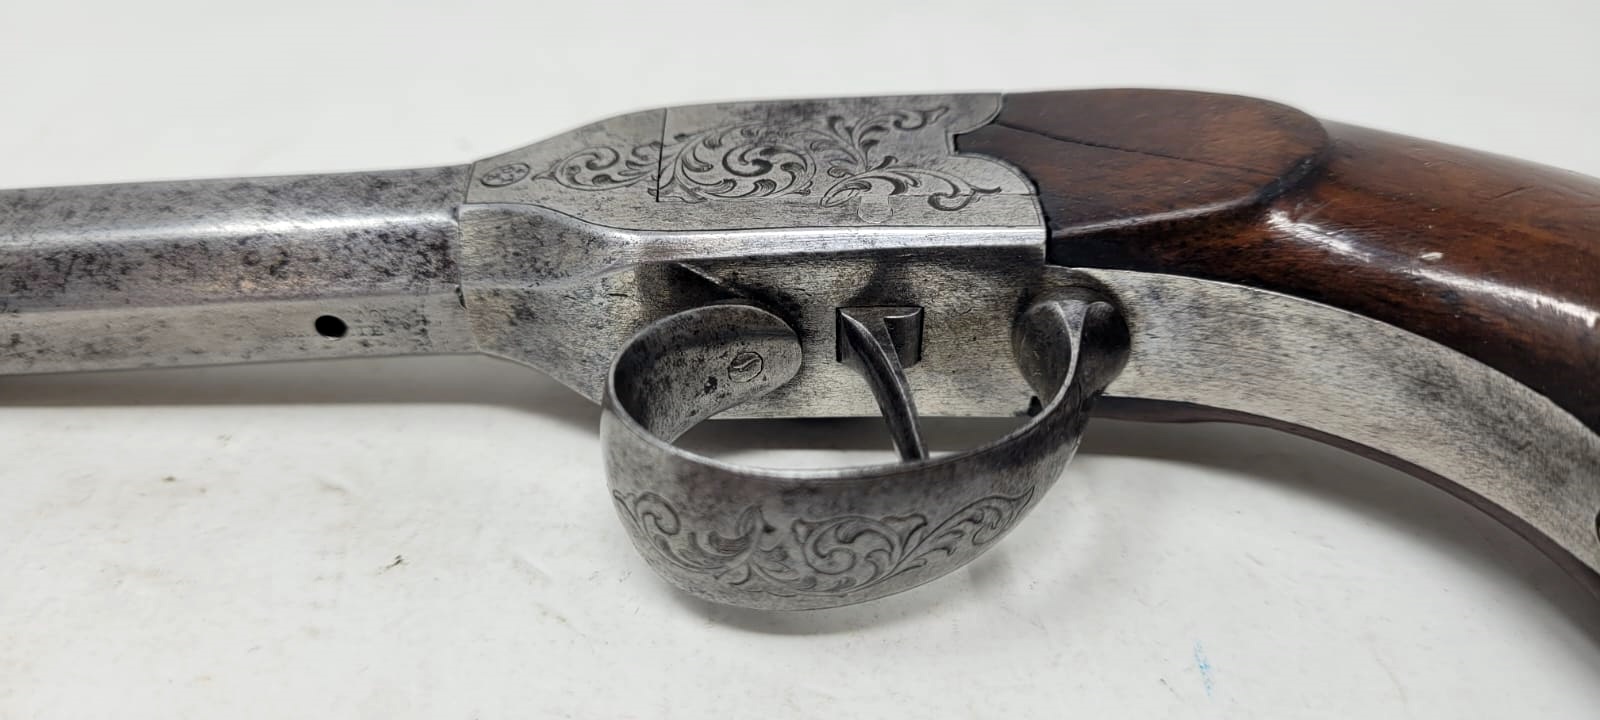 rare needle percussion pistol - side hammer - cenon damascus rifled barrel unscrewable for loading - Liège circa 1850